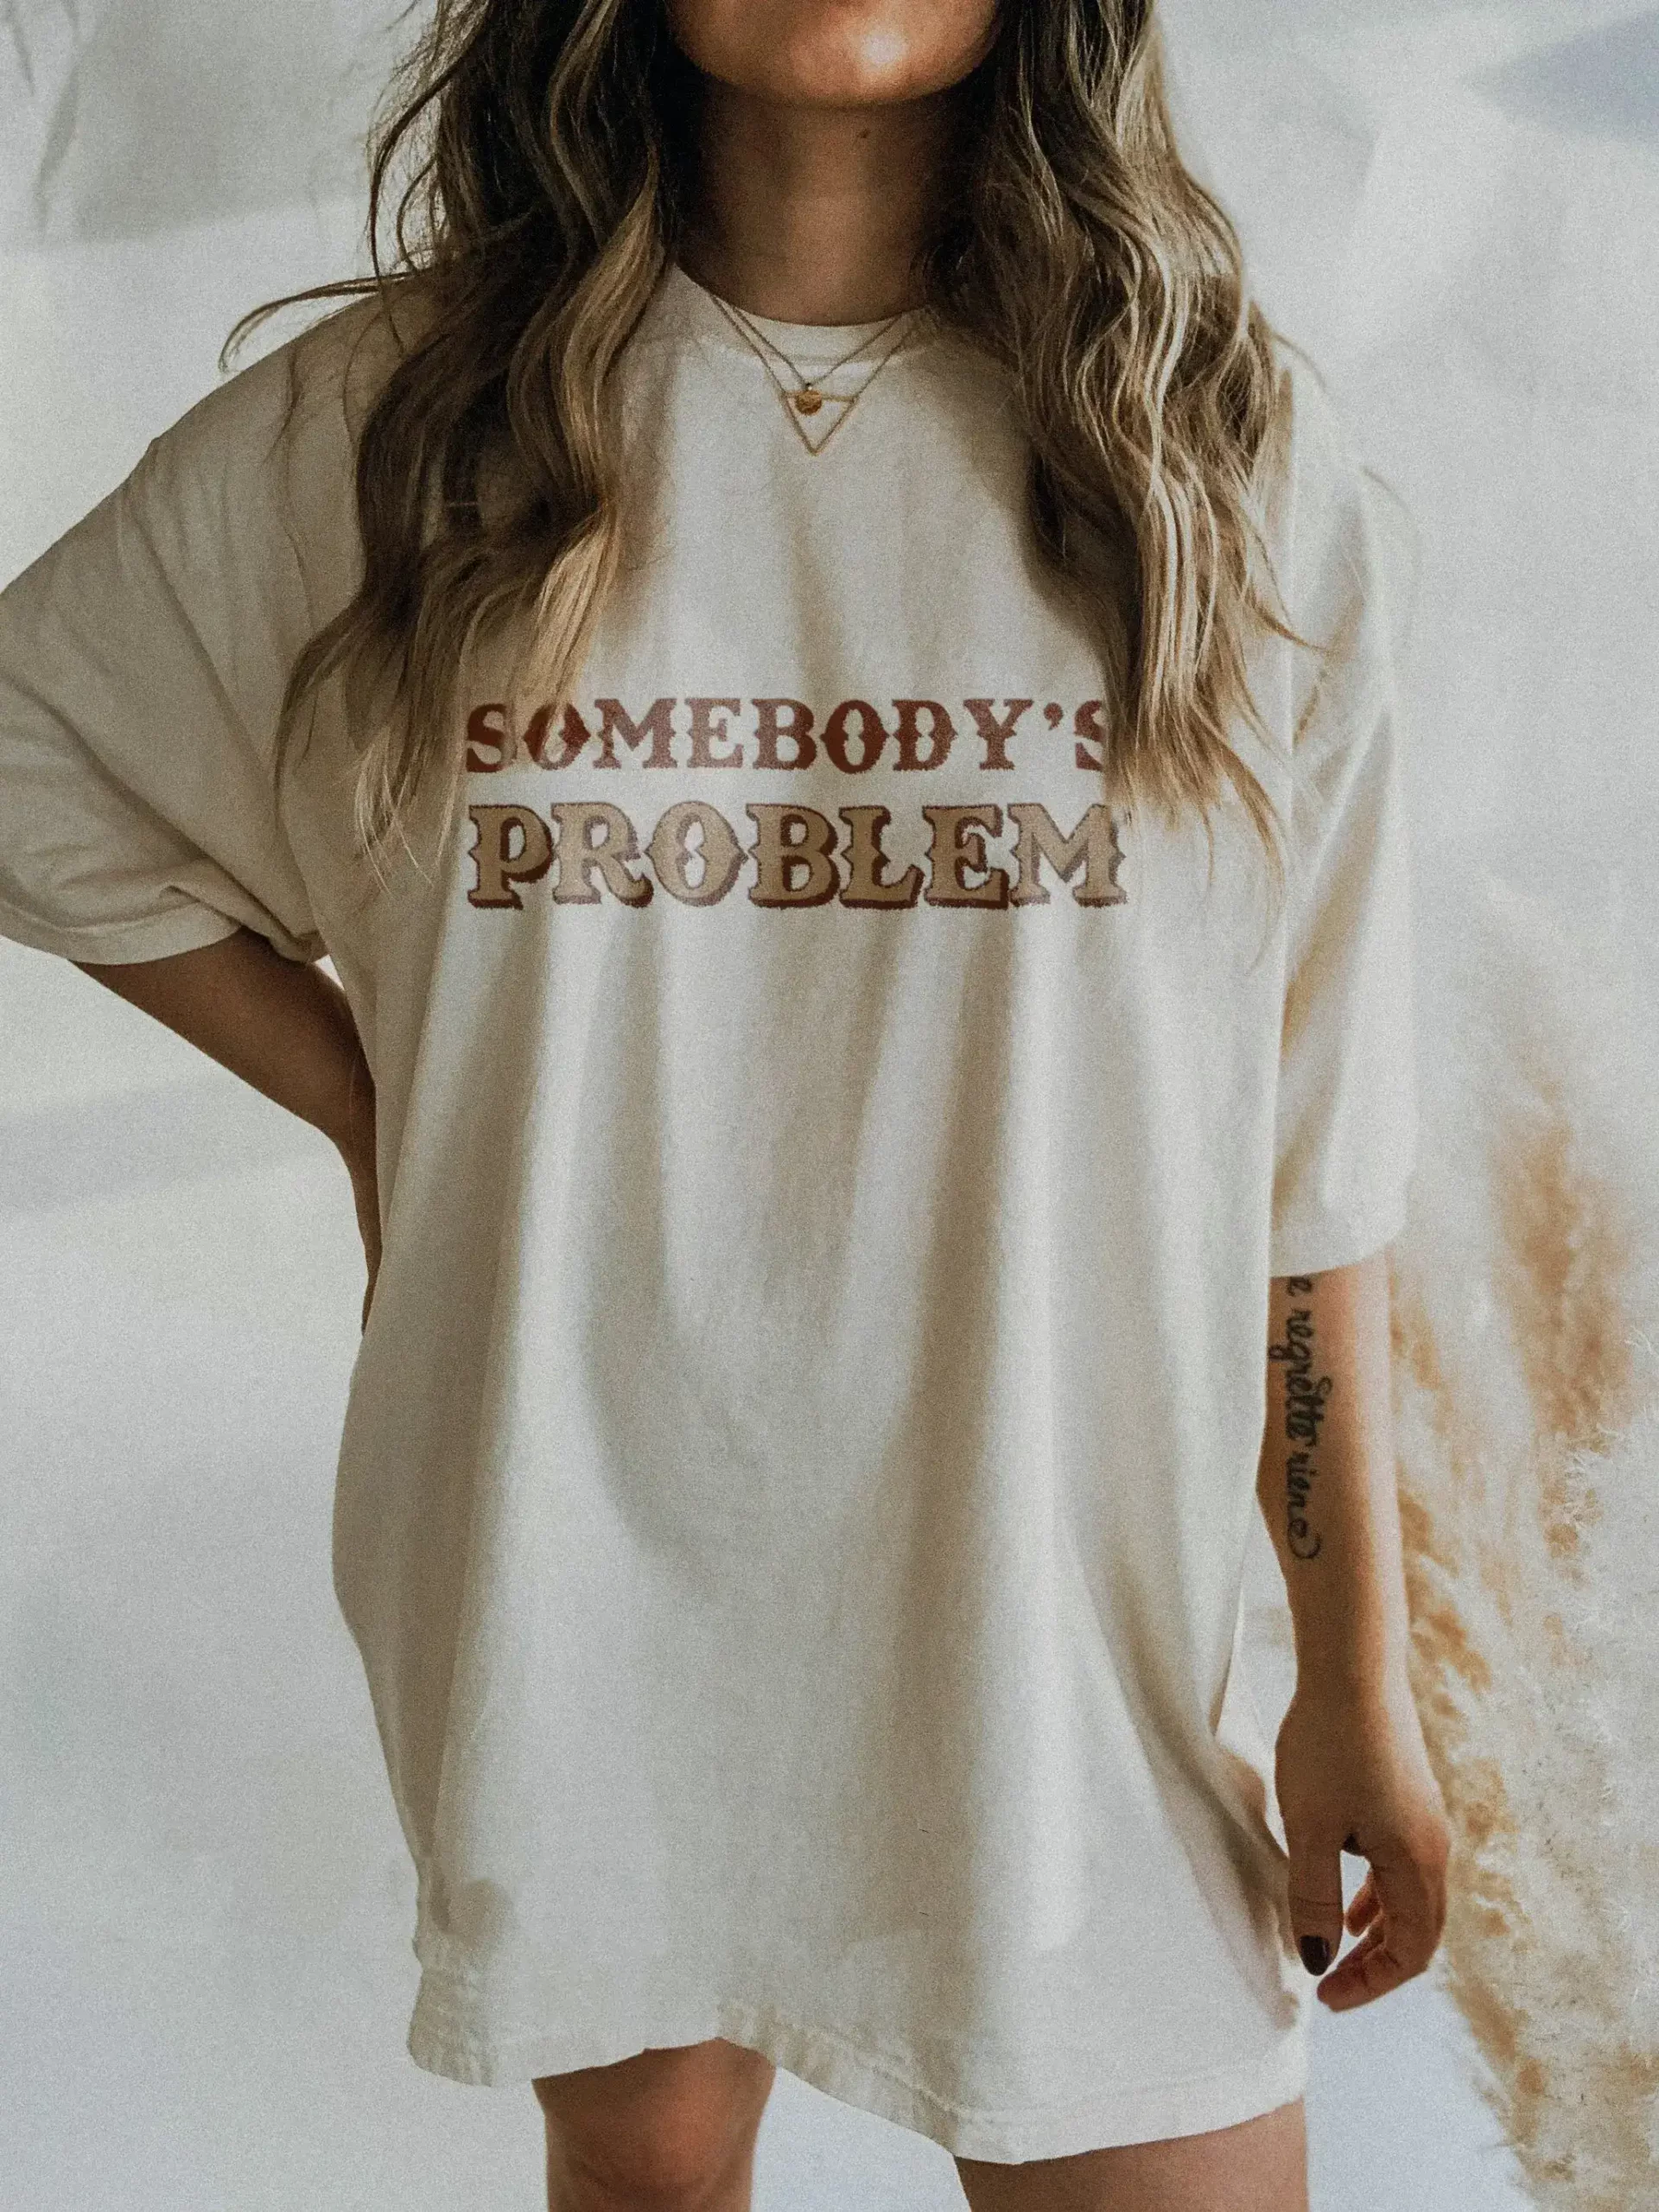 Somebody's Problem Shirt Country Music Shirt Nashville Shirt Cute